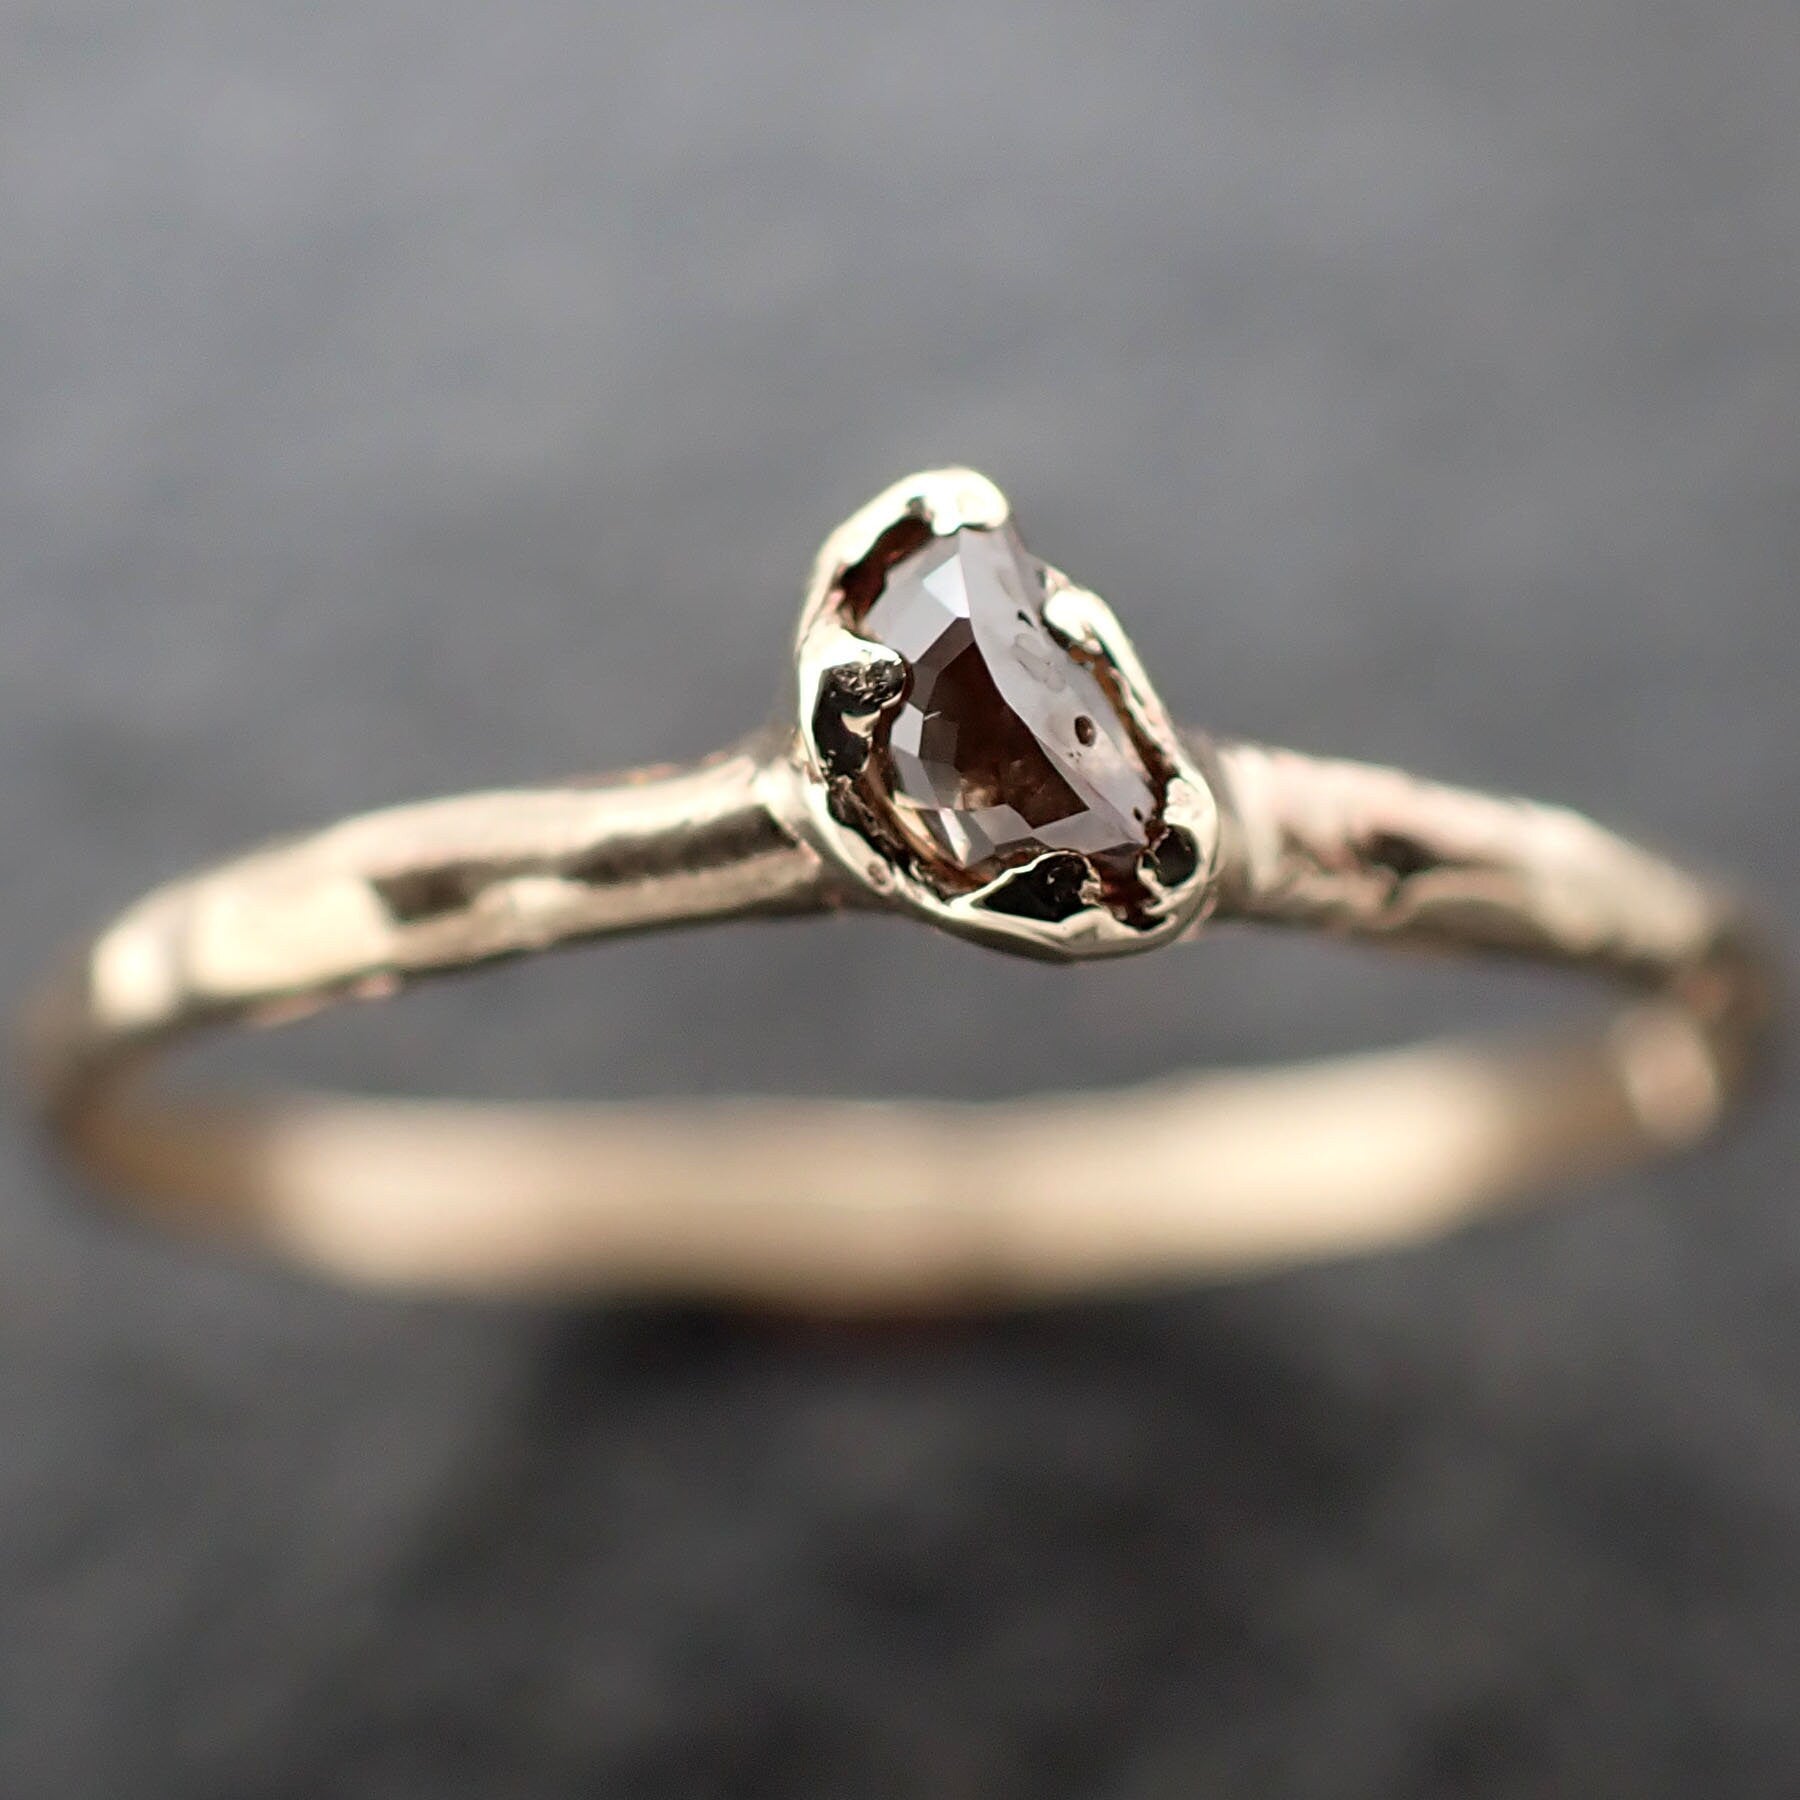 Fancy Cut Half Moon champagne Diamond Solitaire Engagement 14k Gold Wedding Ring byAngeline 3200